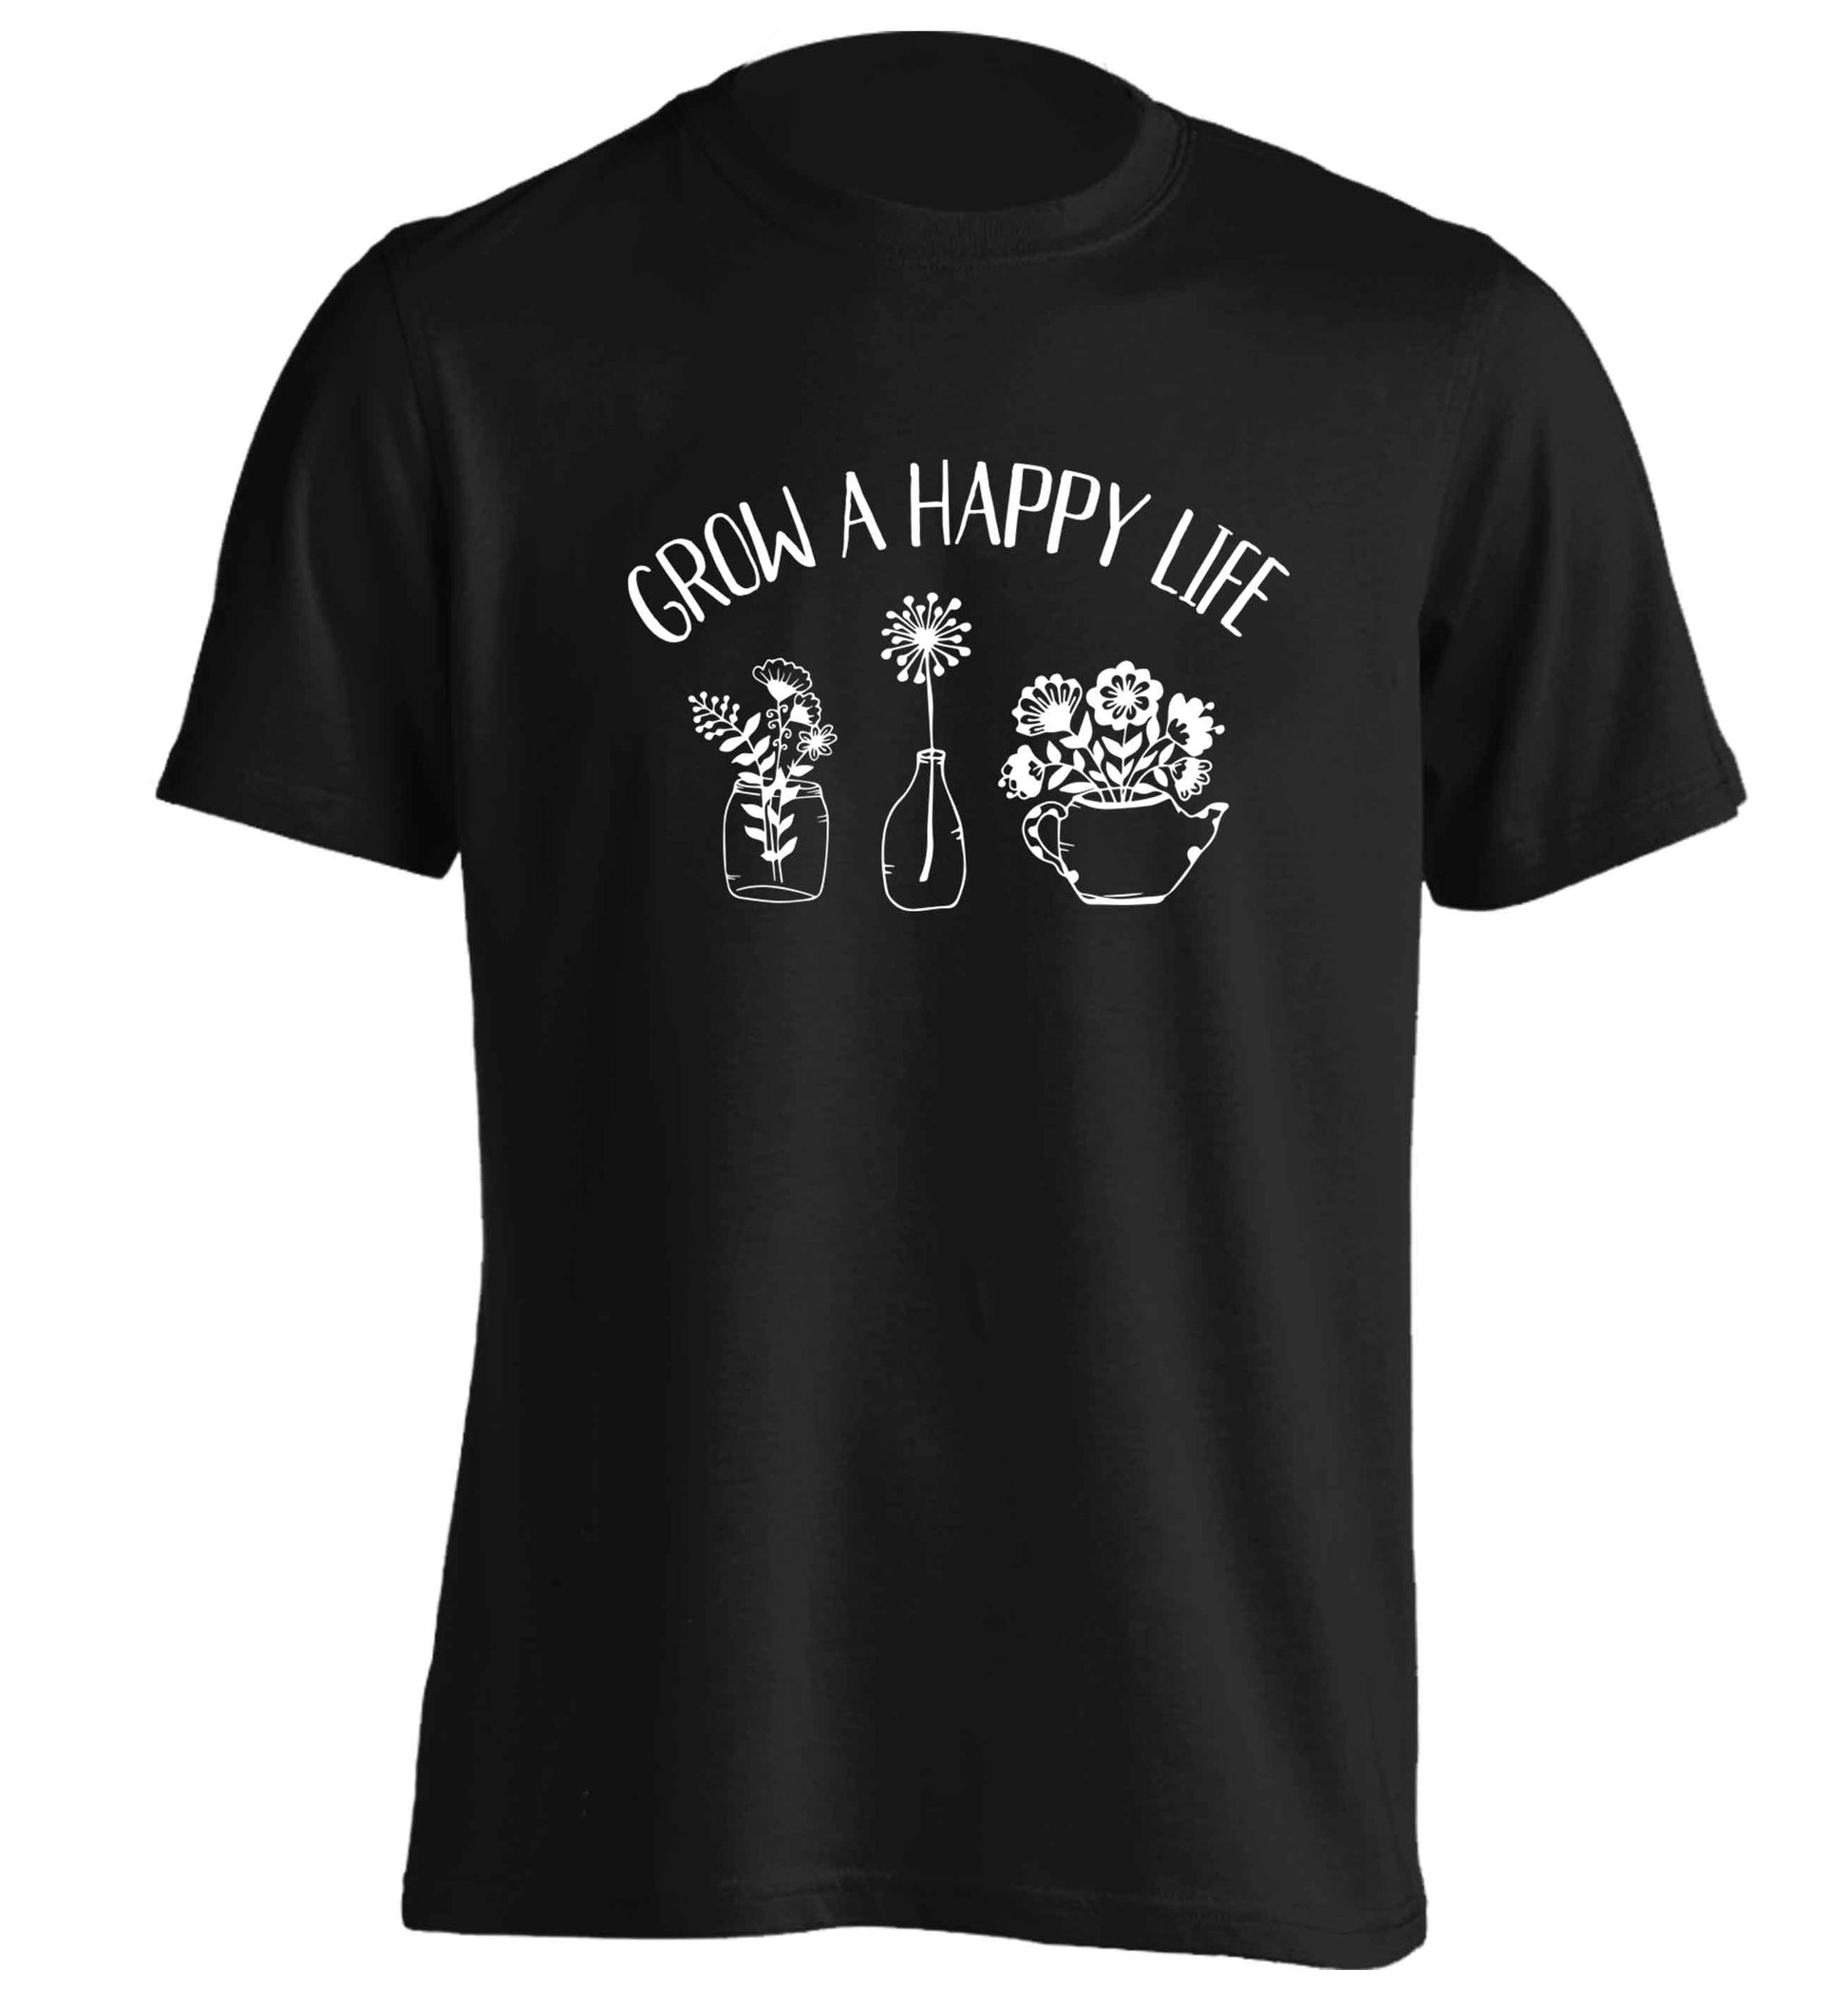 Grow a happy life adults unisex black Tshirt 2XL